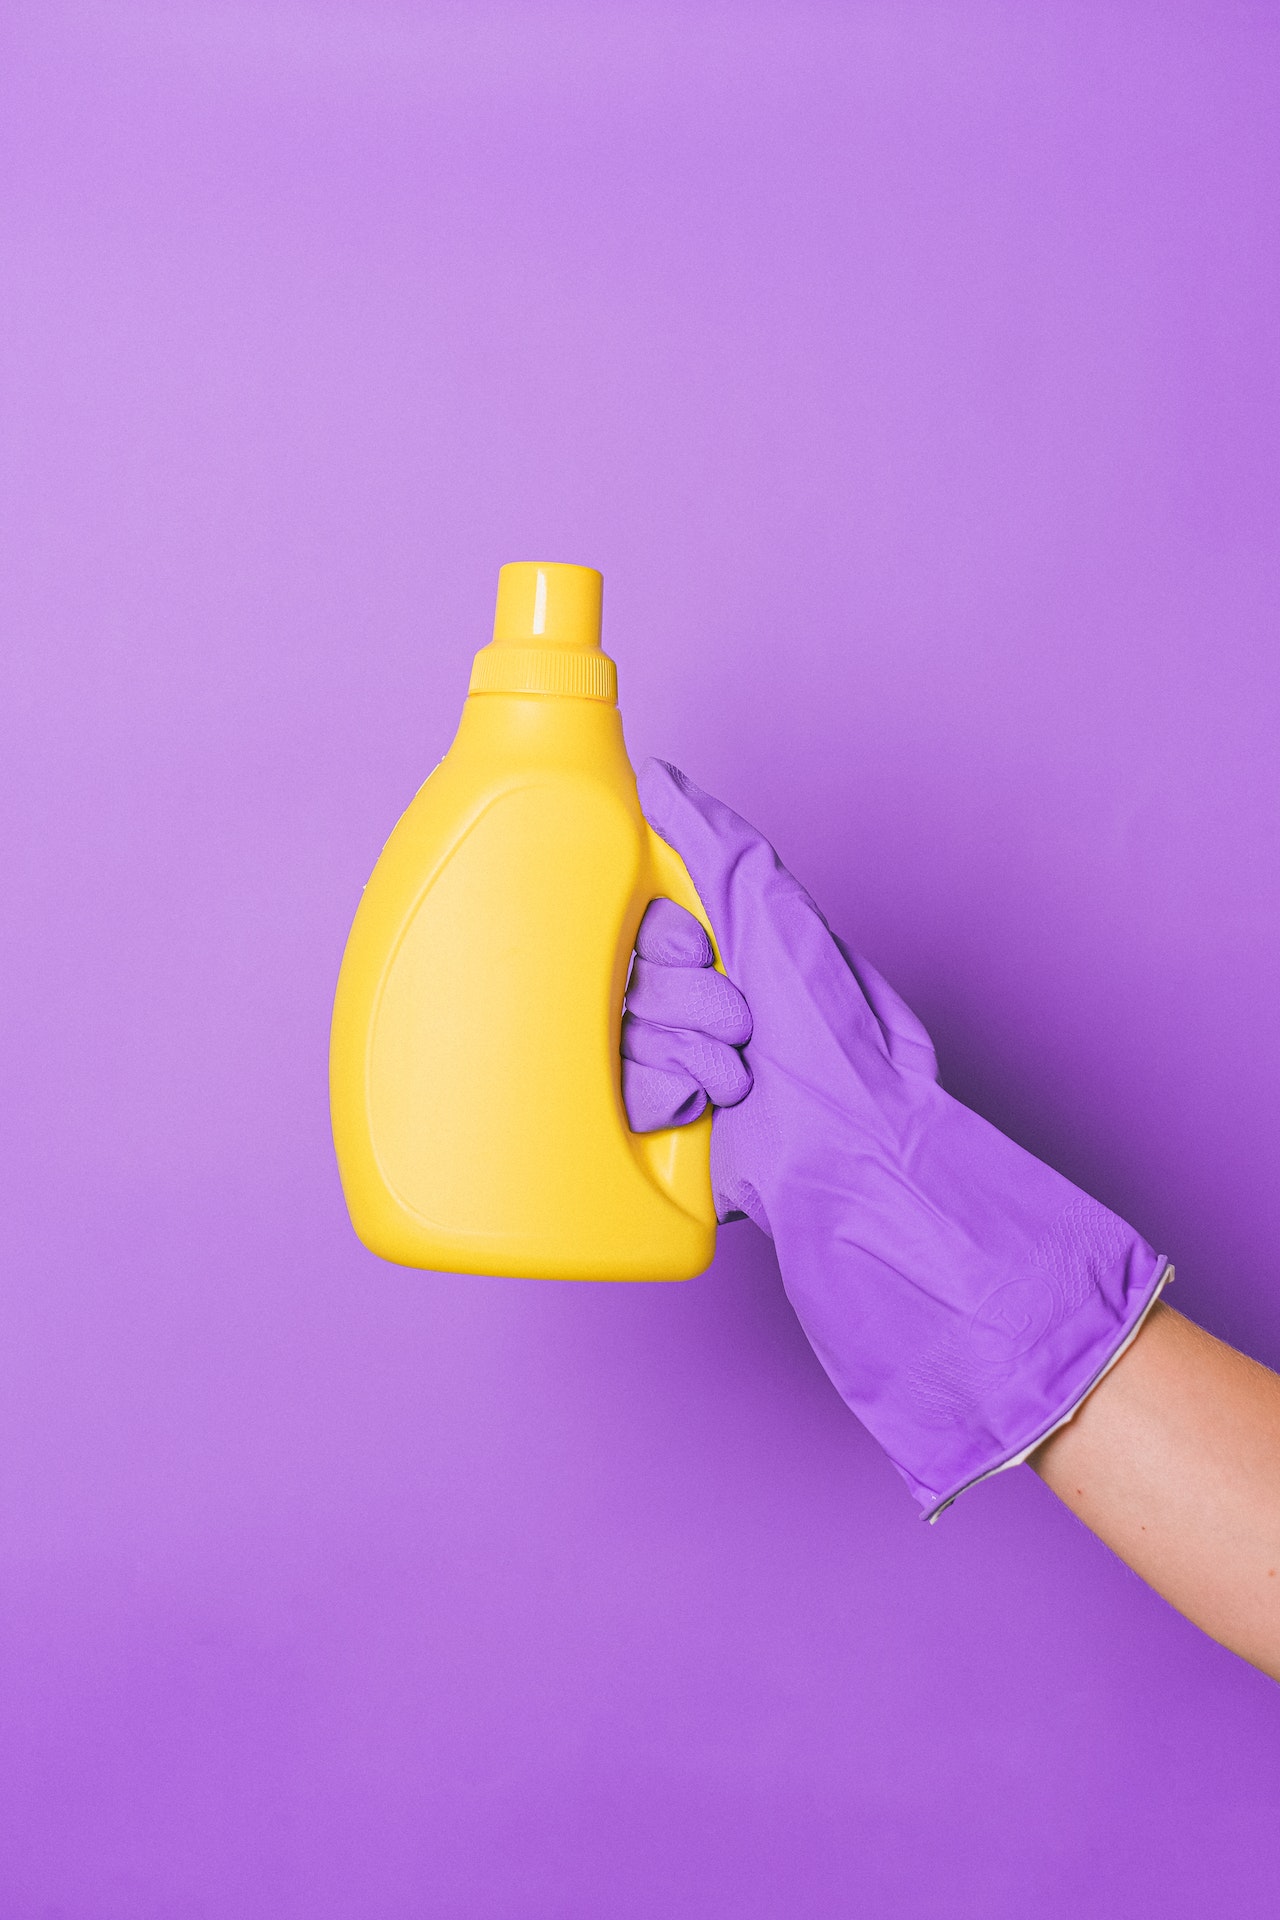 Detergente Neutro para uso hospitalar: limpeza eficiente e segura 1